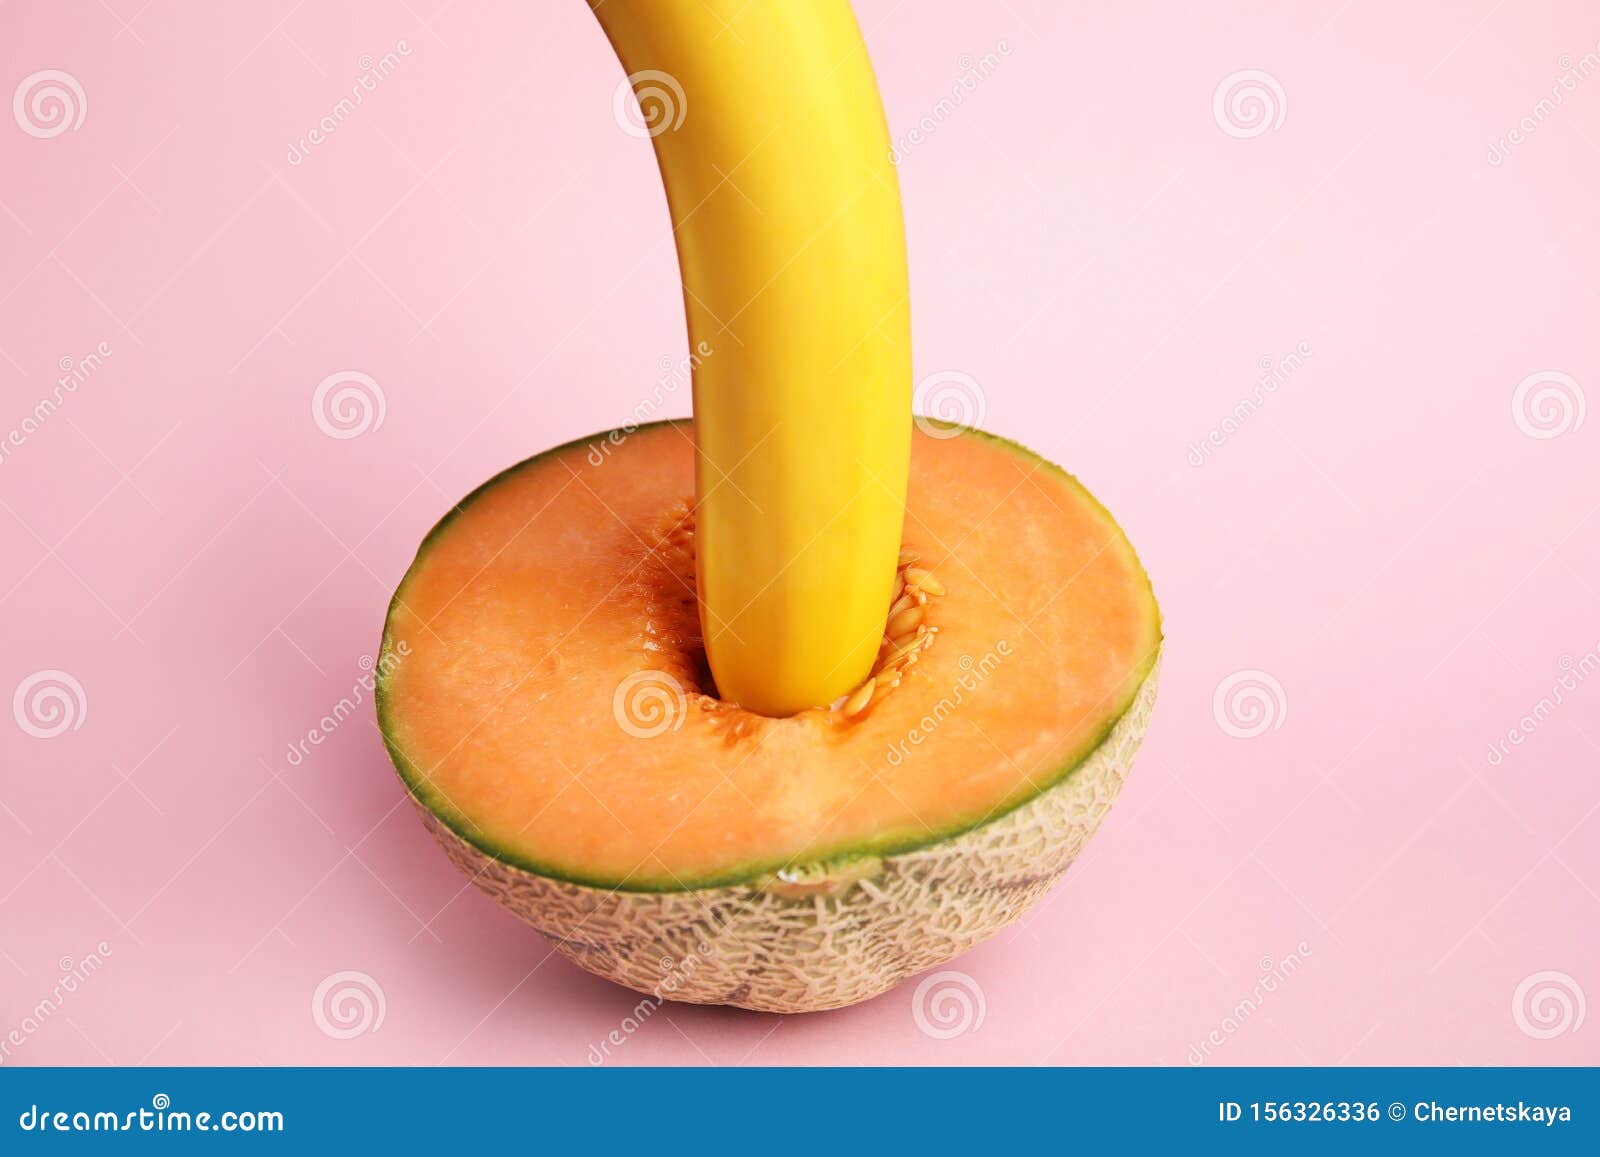 with melon Sex a